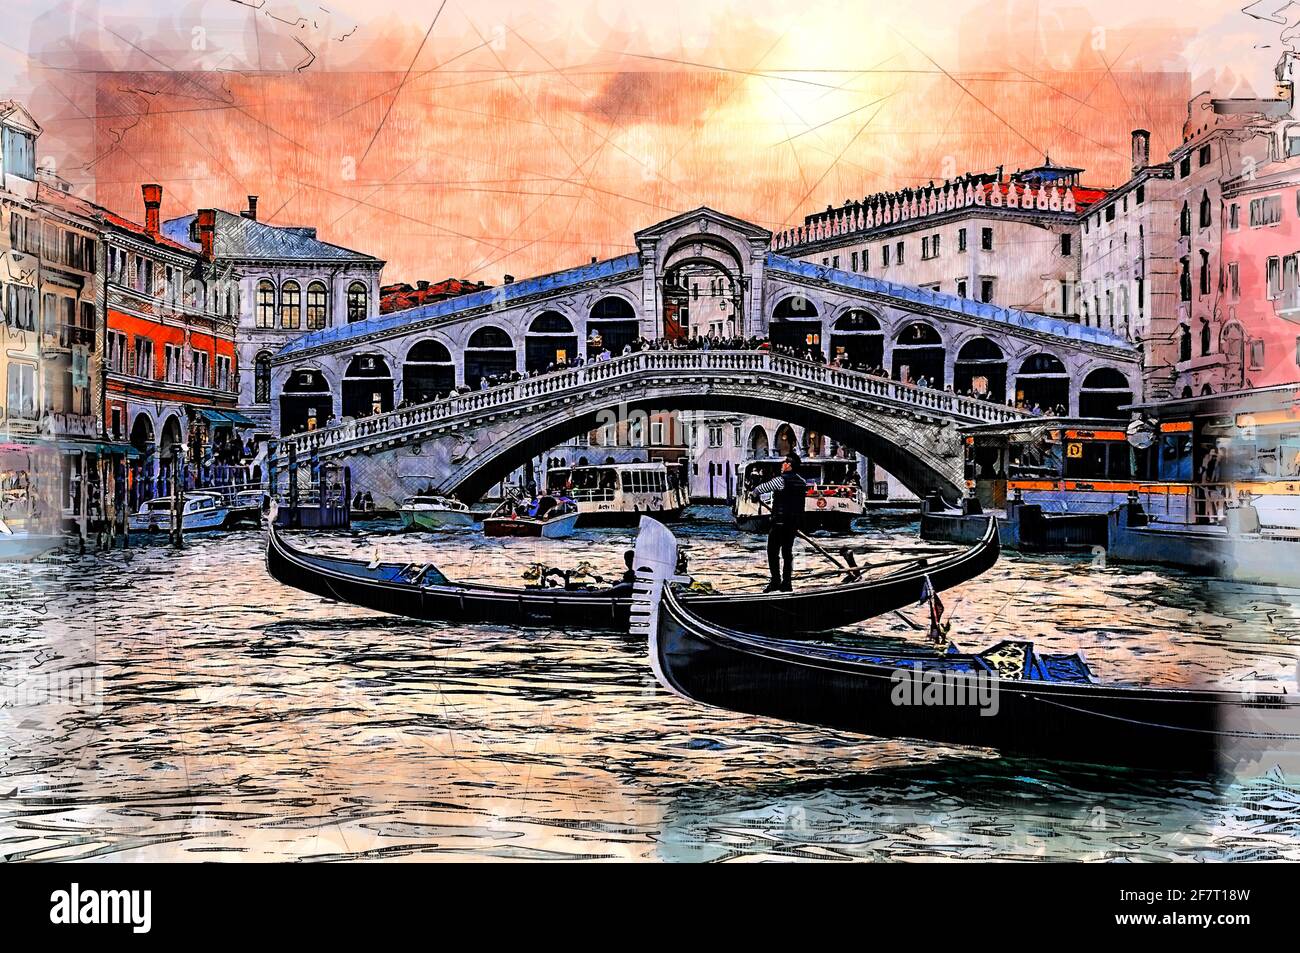 Rialto Bridge Venice Italy  Theodor Decker  Drawings  Illustration  Buildings  Architecture Landmarks National Monuments  ArtPal